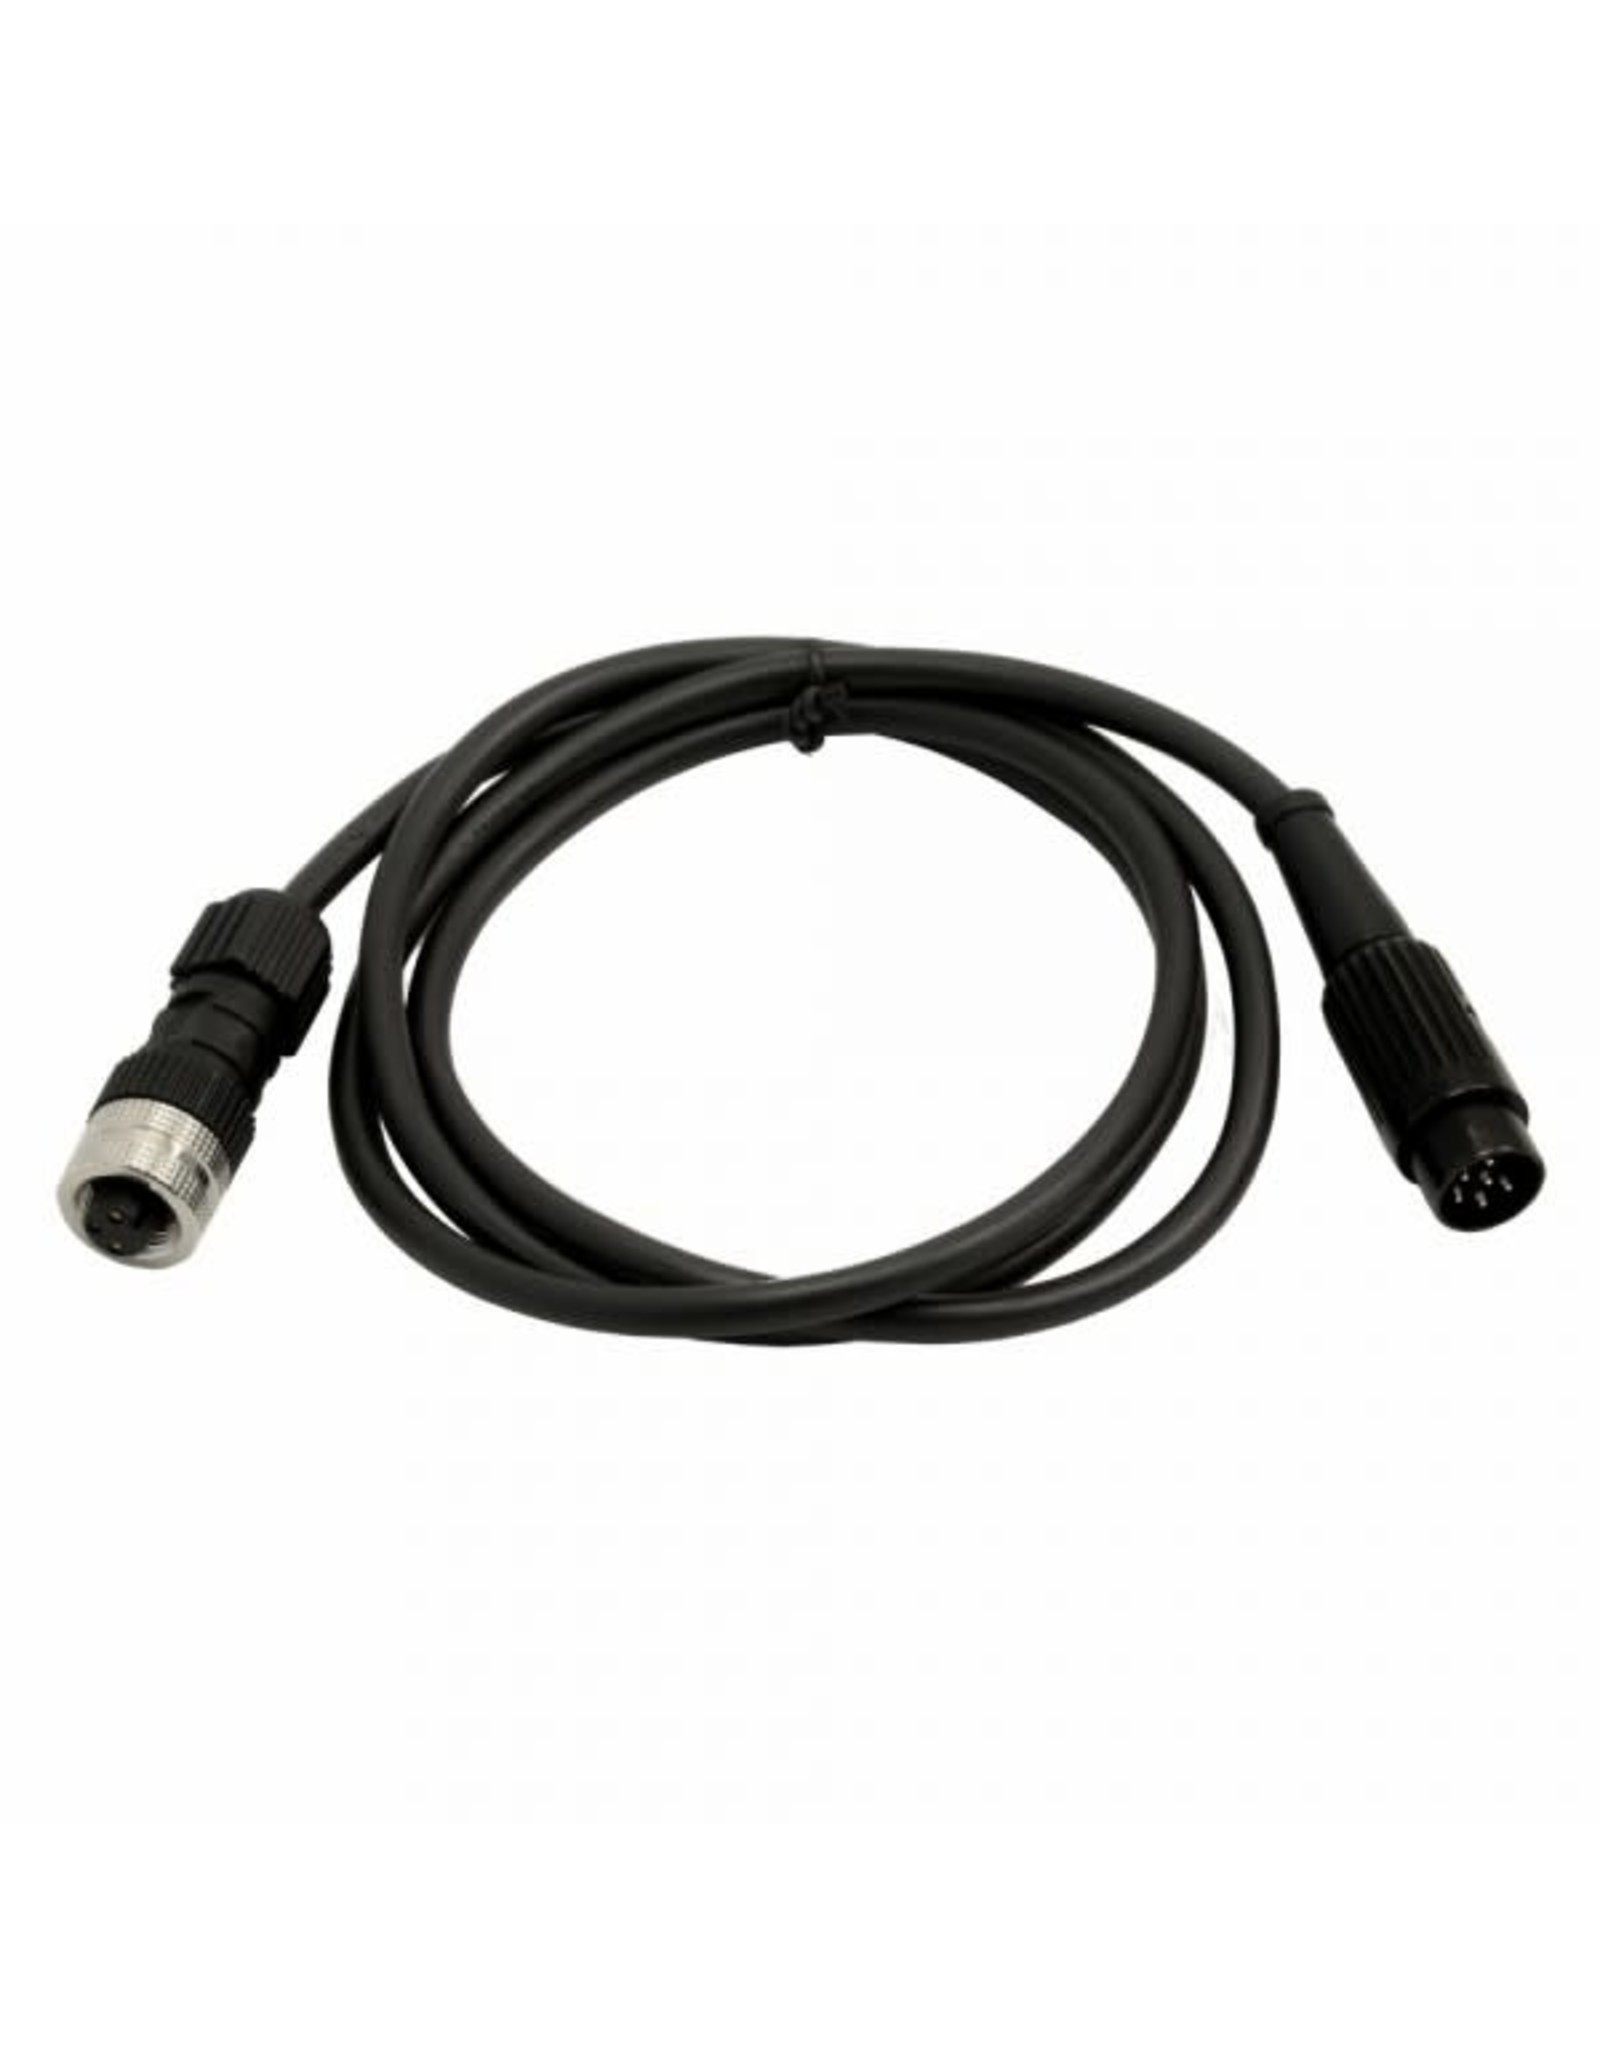 PrimaLuceLab PrimaLuceLab Eagle-compatible power cable for SBIG STL and STXL camera - 115cm 8A